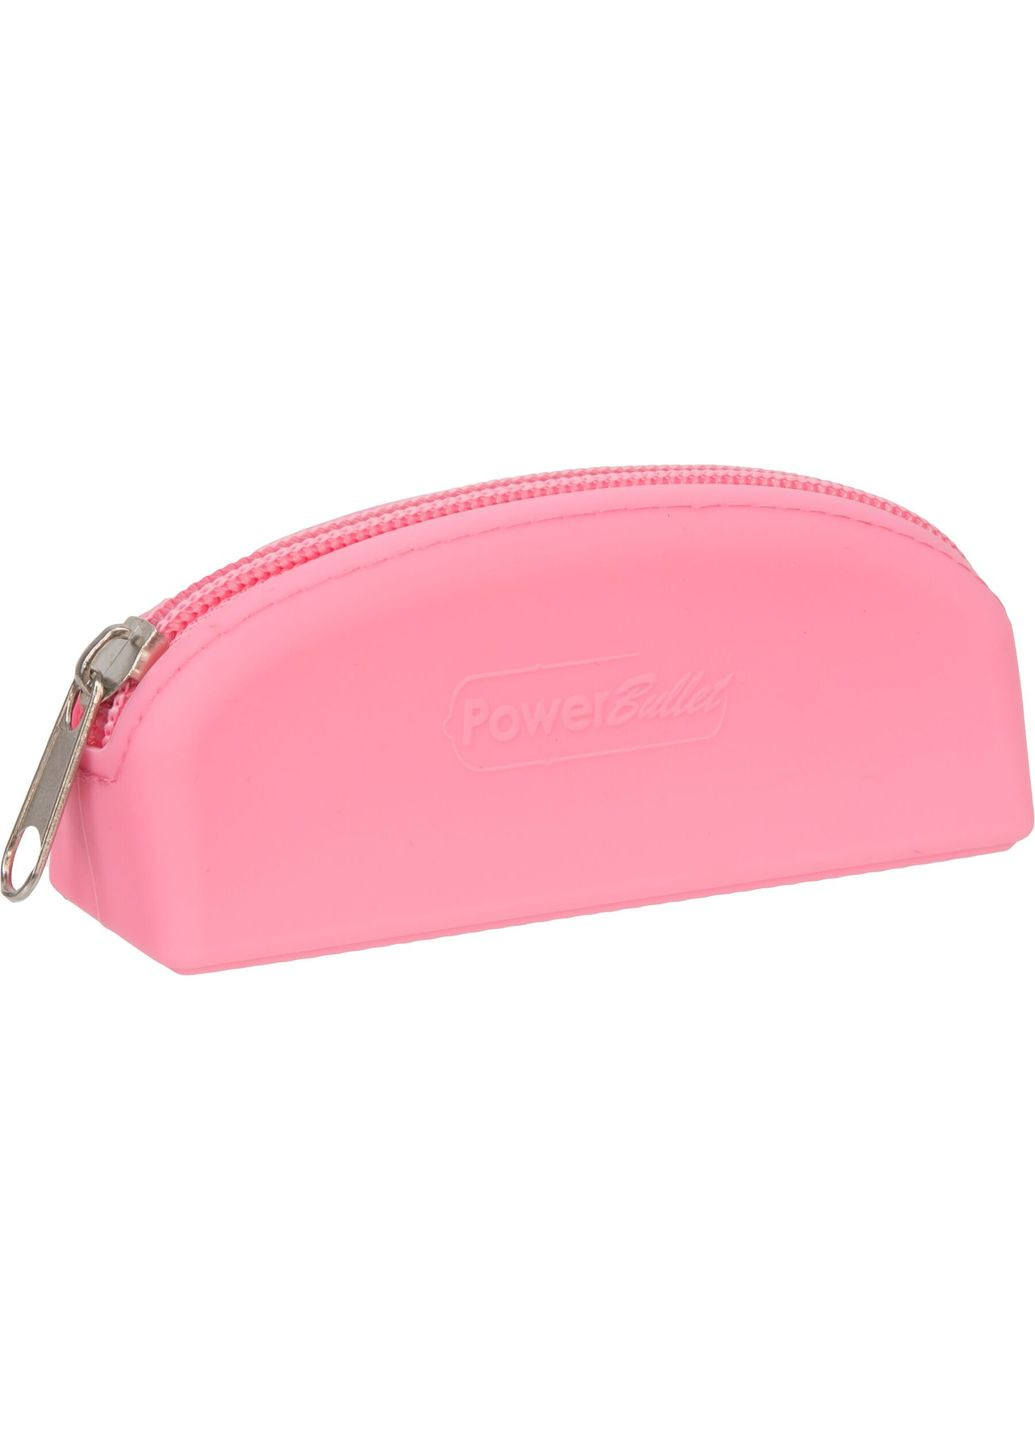 Сумка для хранения секс-игрушек - Silicone Storage Zippered Bag Pink PowerBullet (291441820)